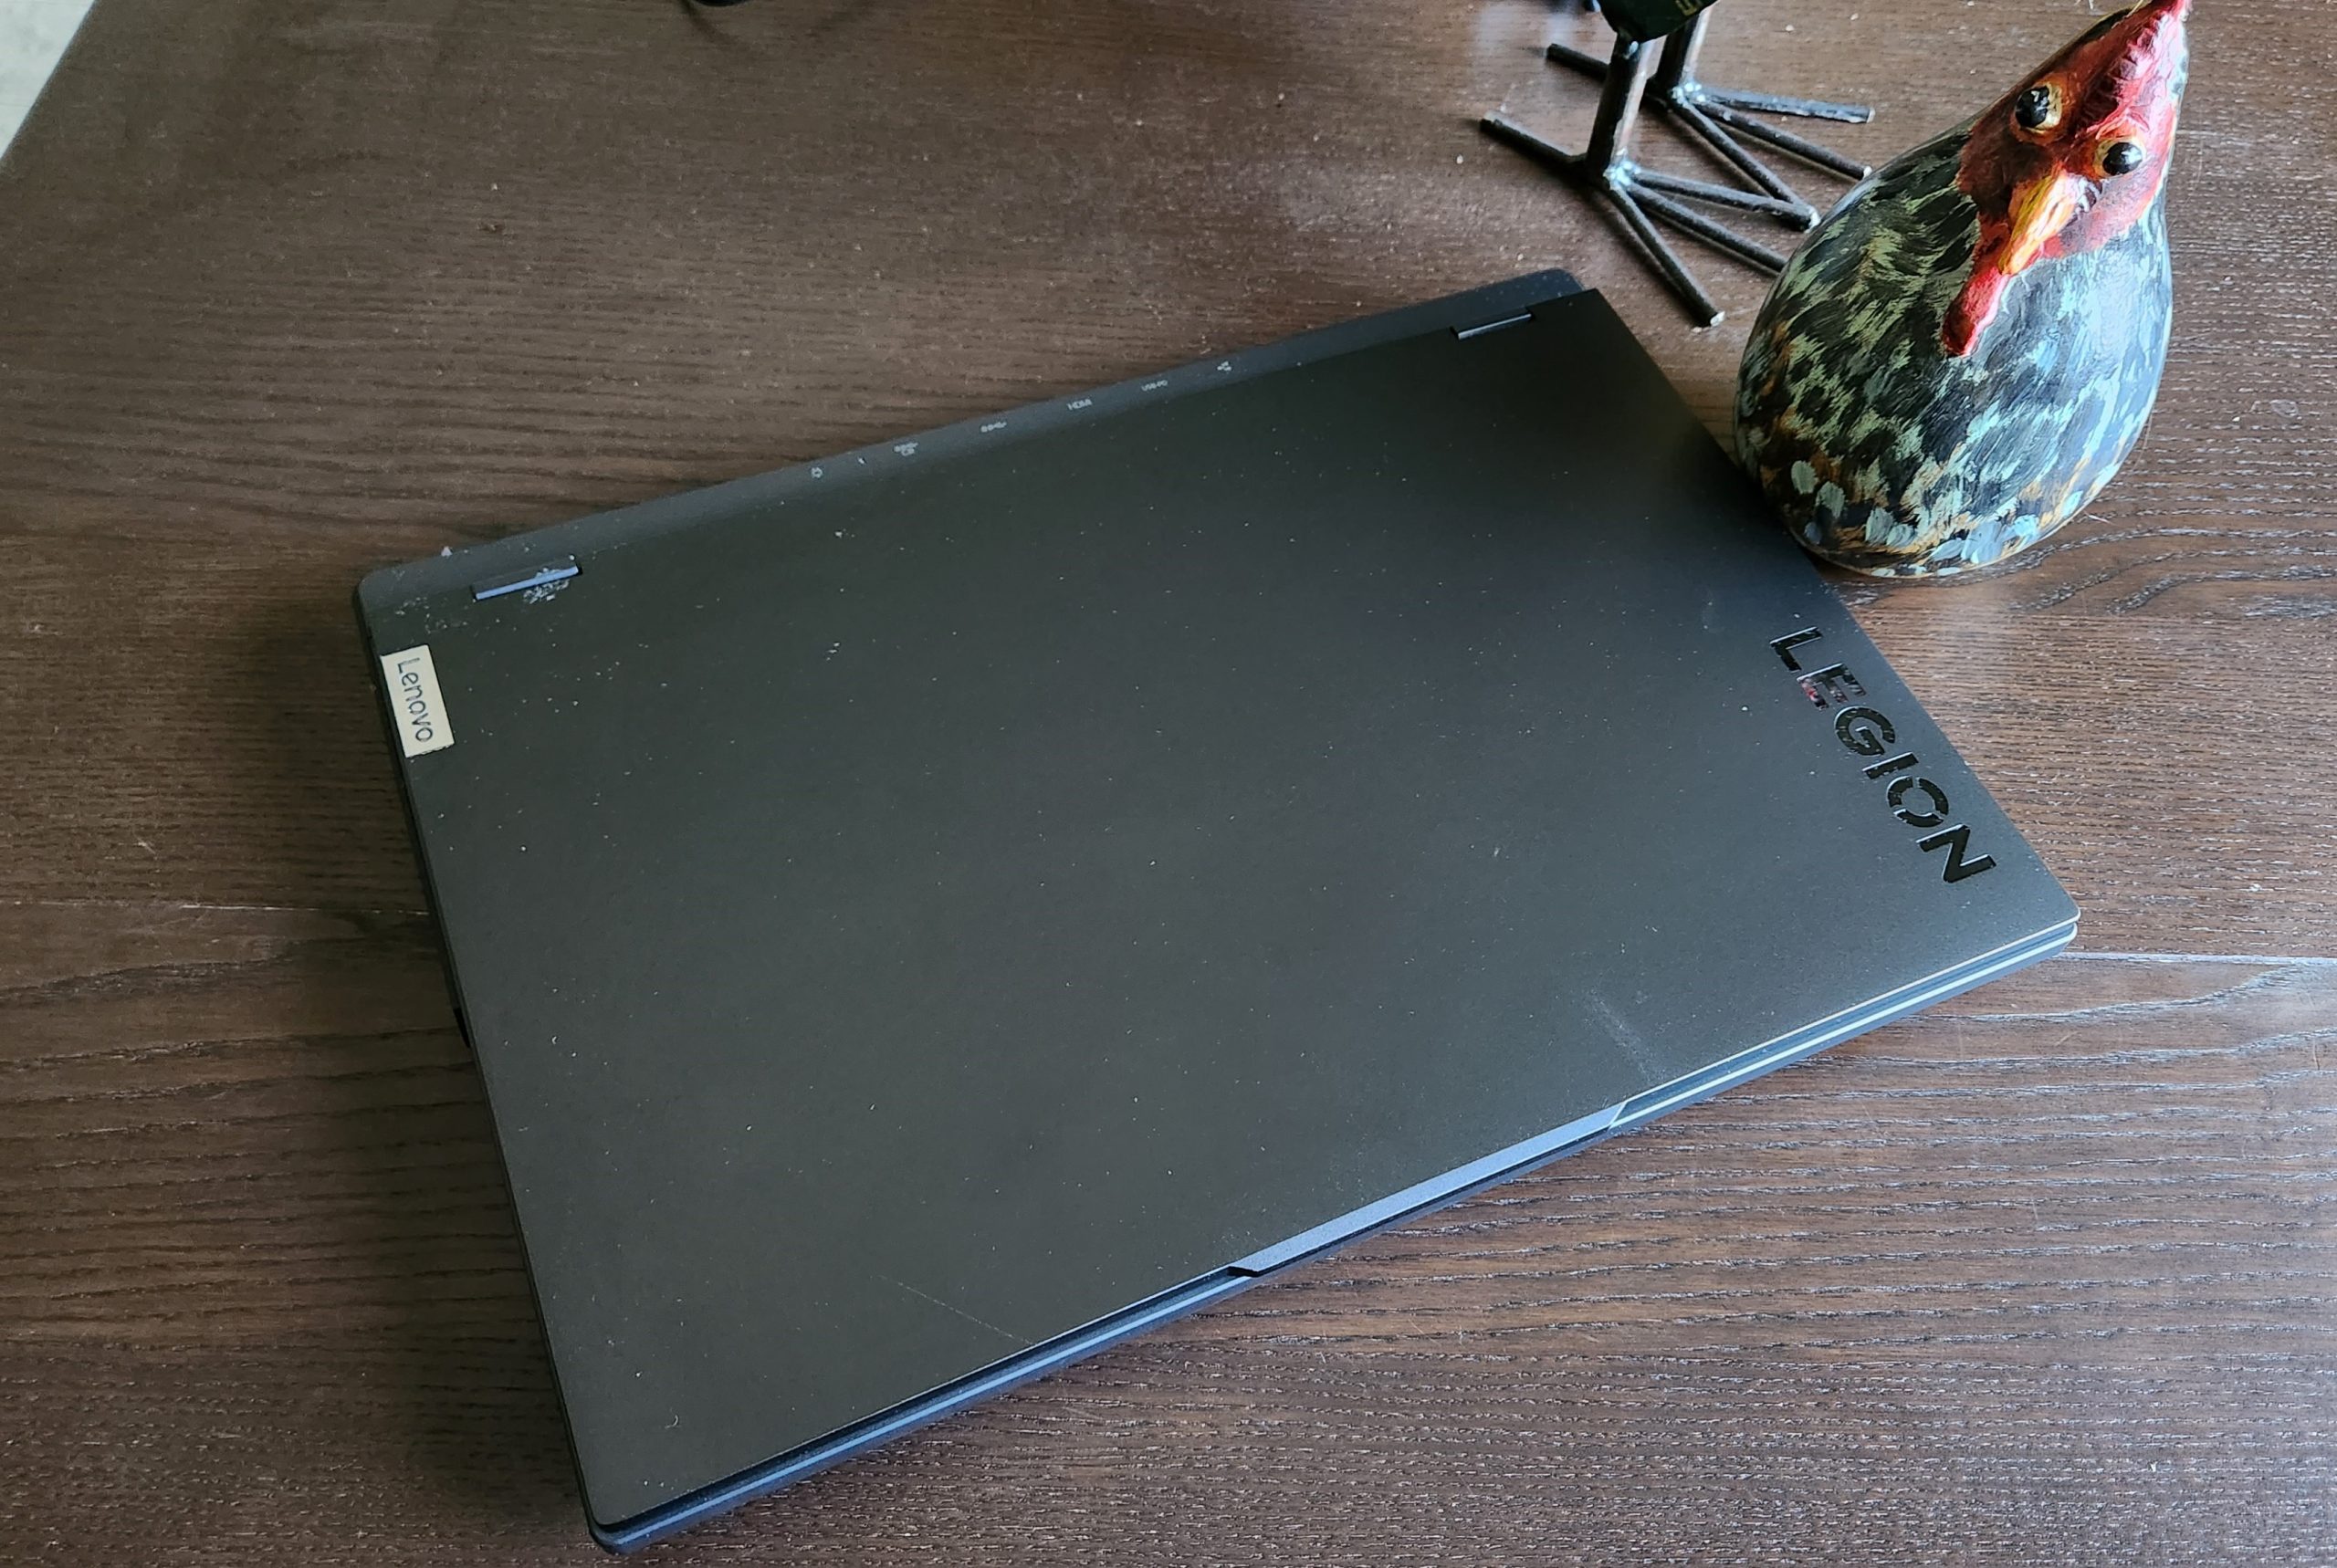 Legion Pro 7i Gen 8 (16″ Intel)  AI-tuned Gaming Laptop RTX 4090